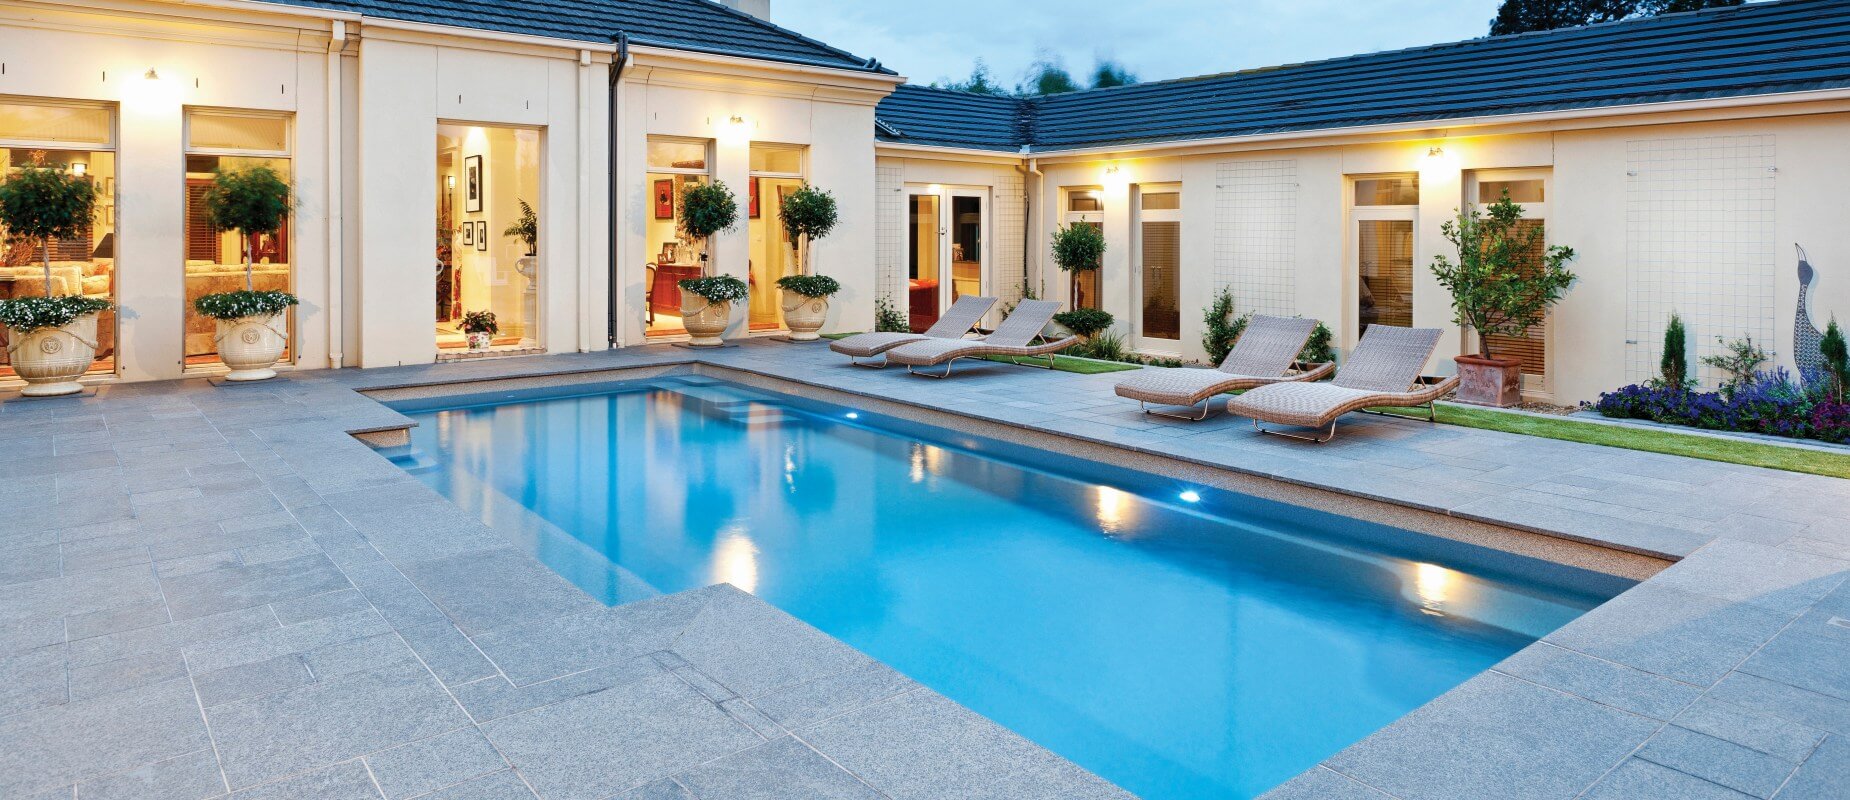 012-Compass-Pools-Australia_Vogue-fibreglass-pool-perfect-for-families